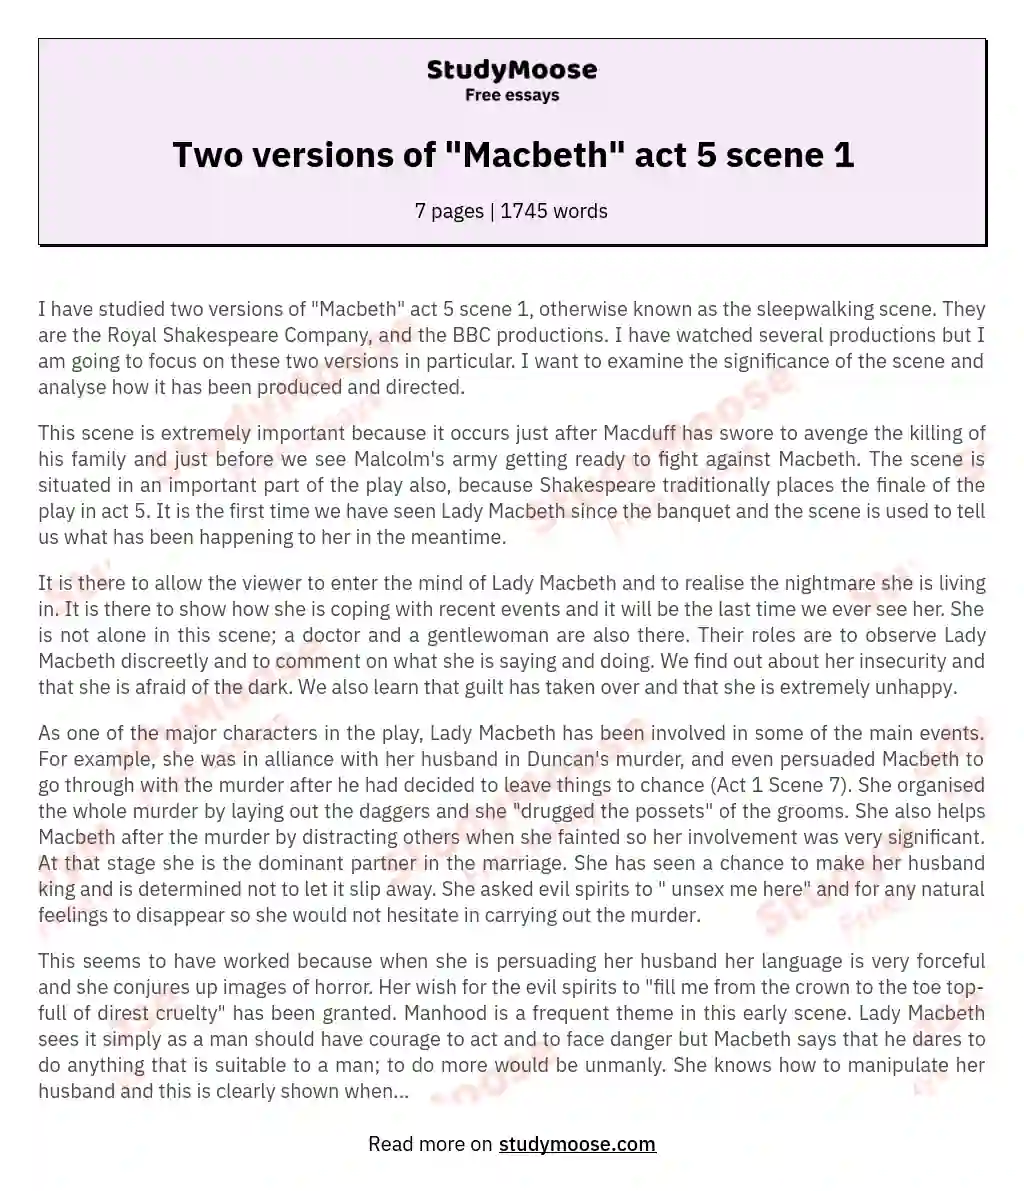 Two versions of "Macbeth" act 5 scene 1 essay